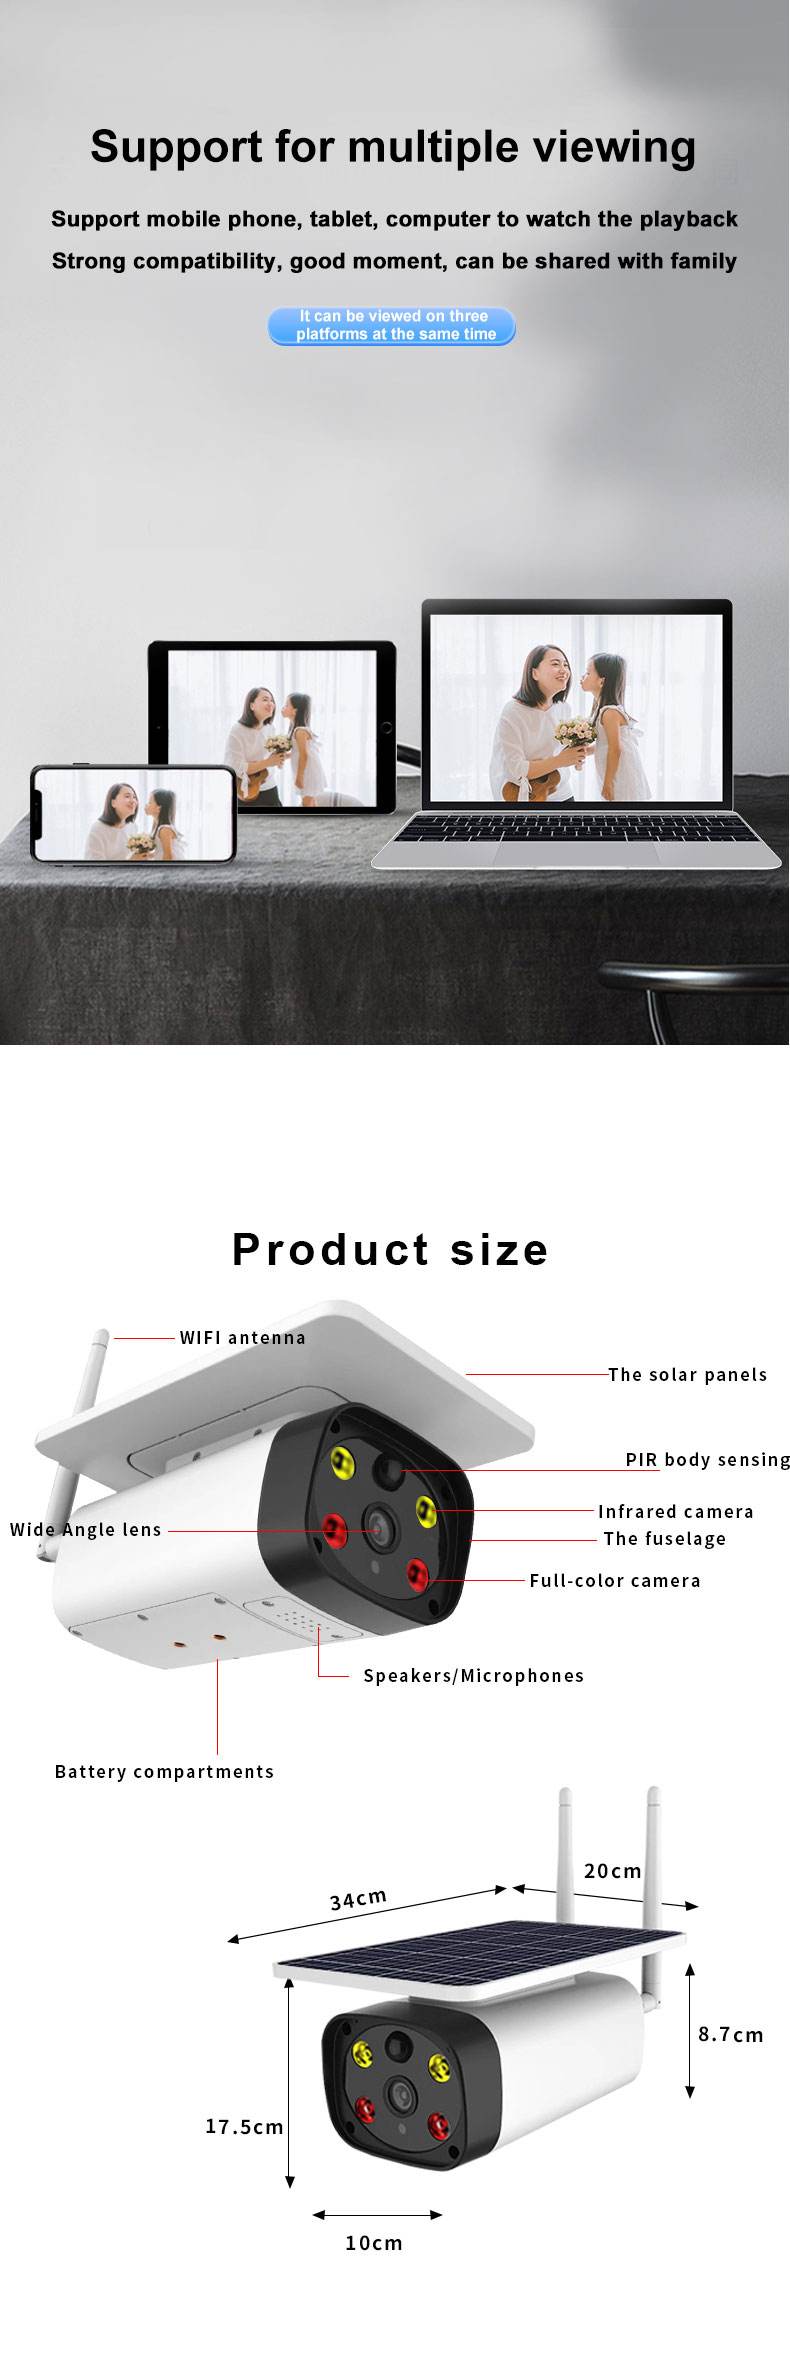 Hot Sale 3MP Battery Powered CCTV Camera 4G Wireless Solar Bullet IP Cam Outdoor Surveillance Low Consumption